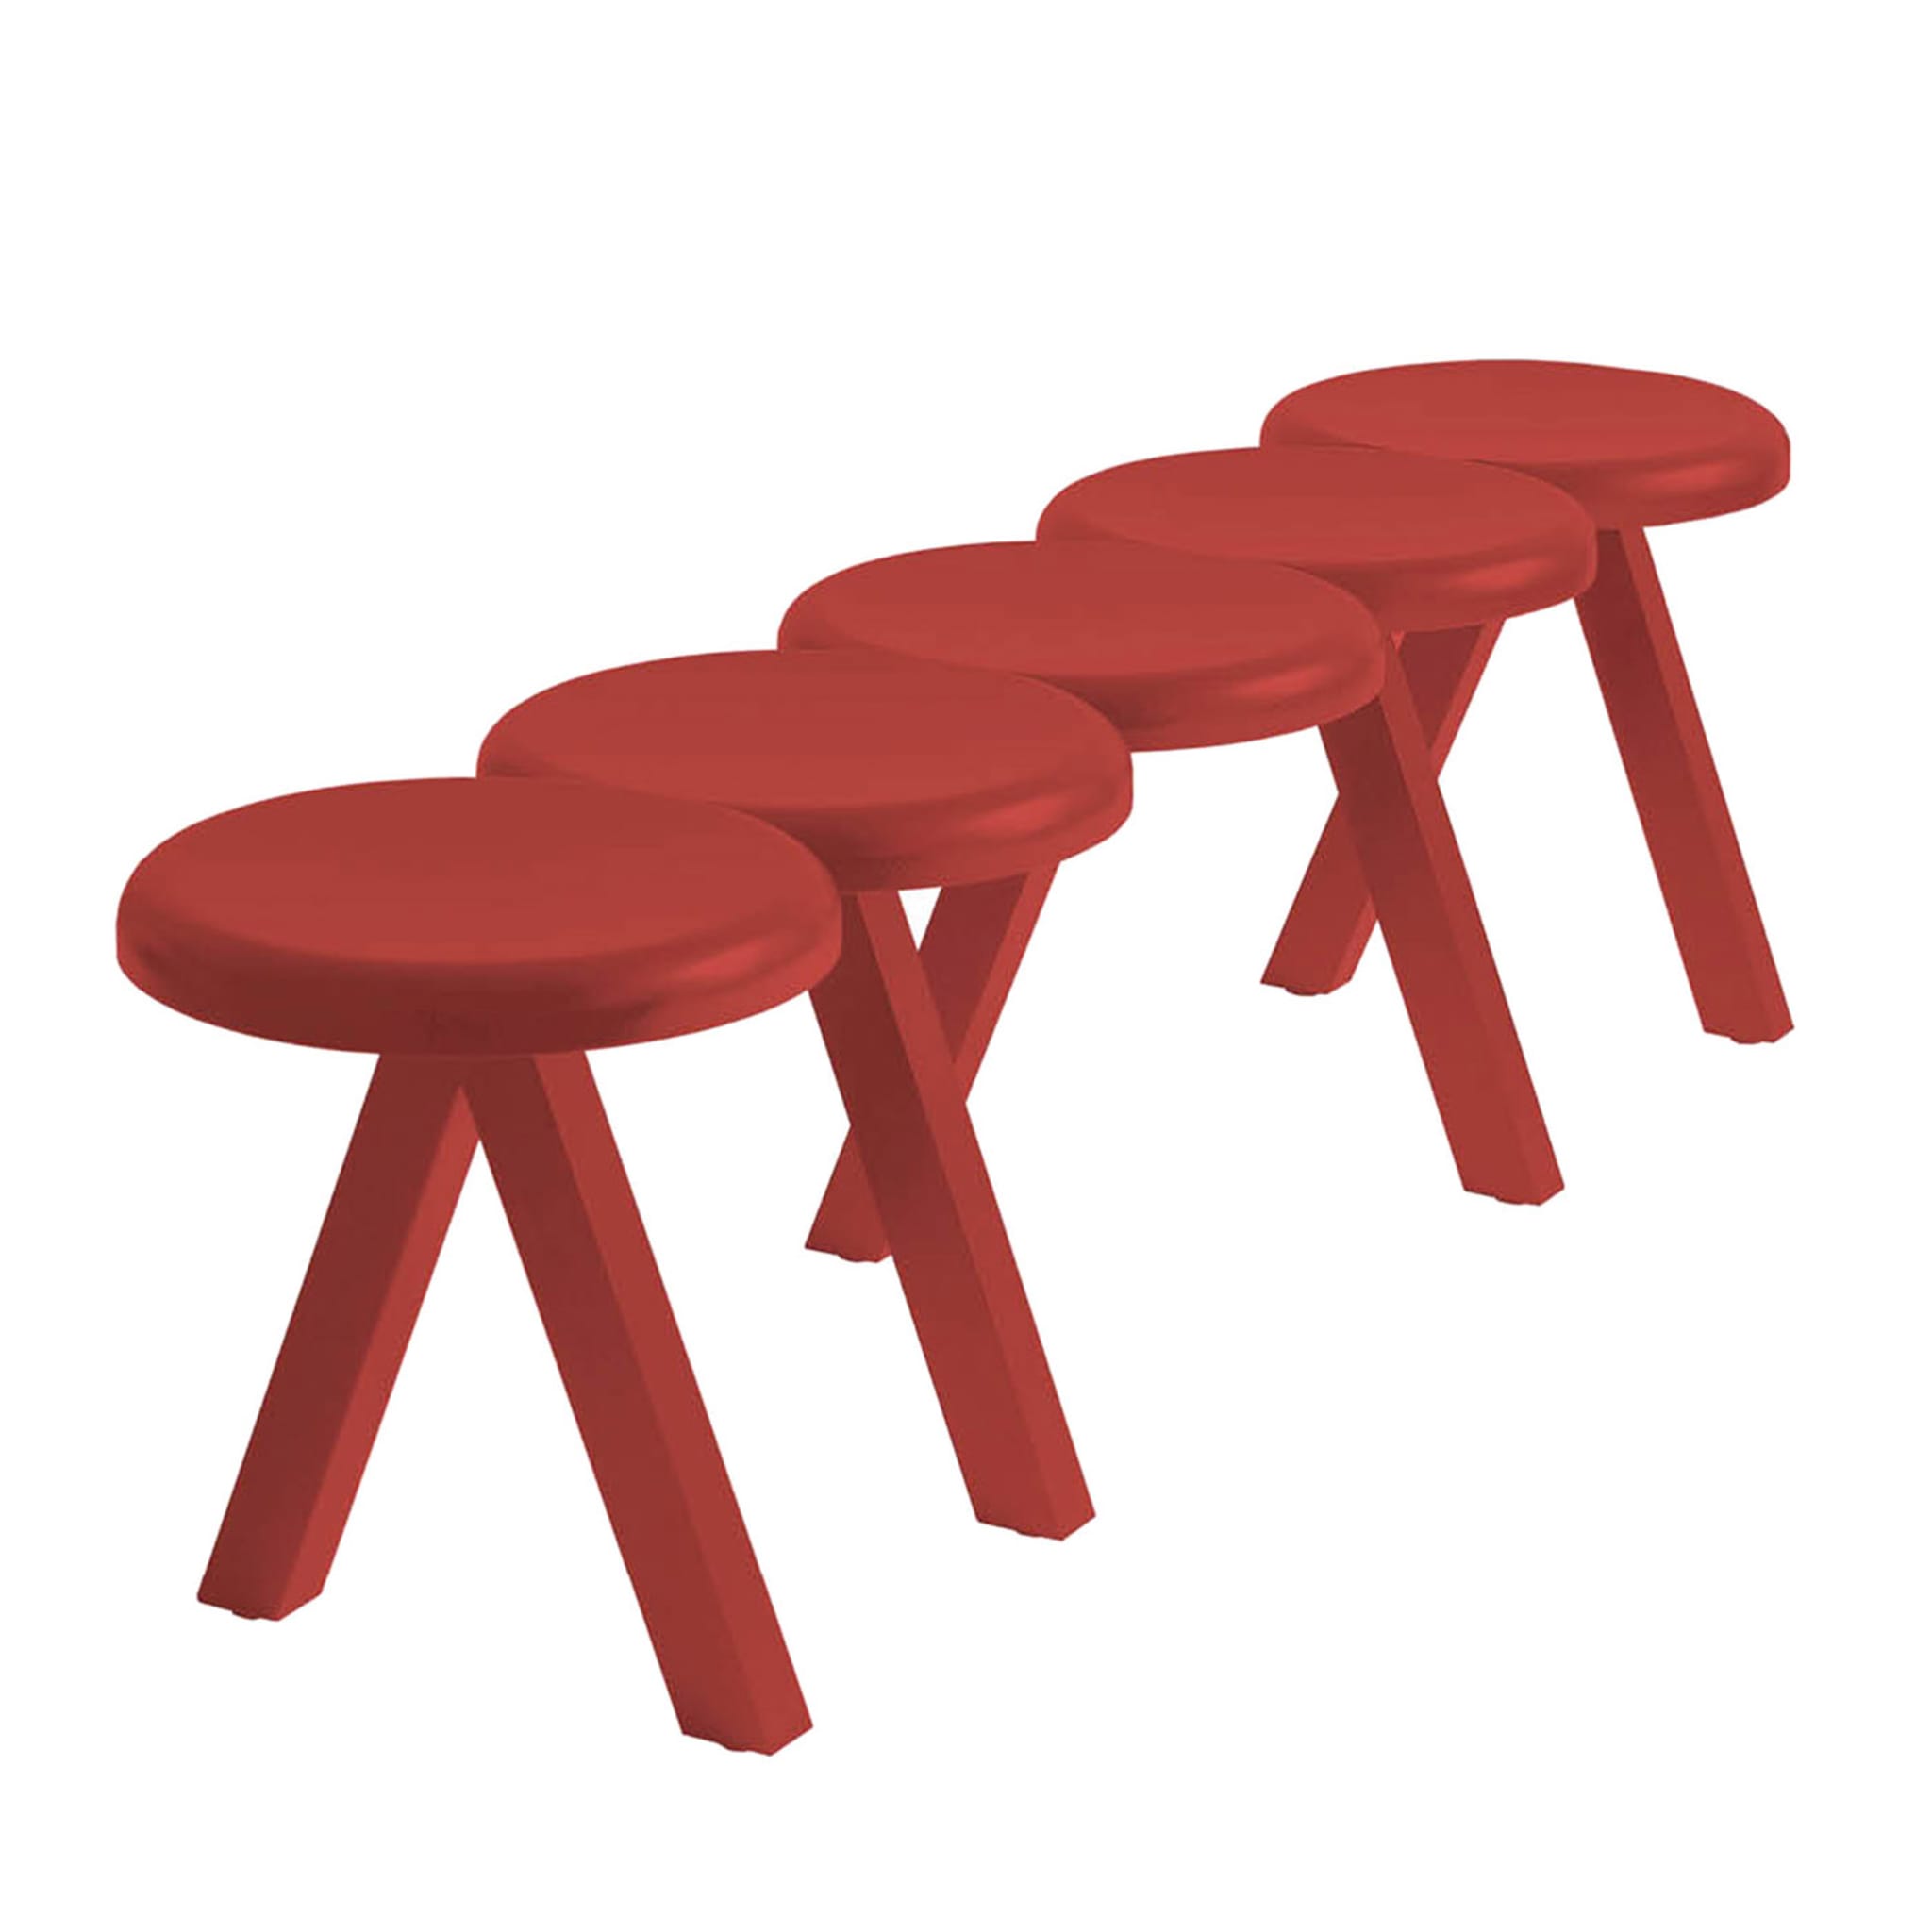 Millepiedi 5-Seat Red Bench by Studio Catoir - Vue principale